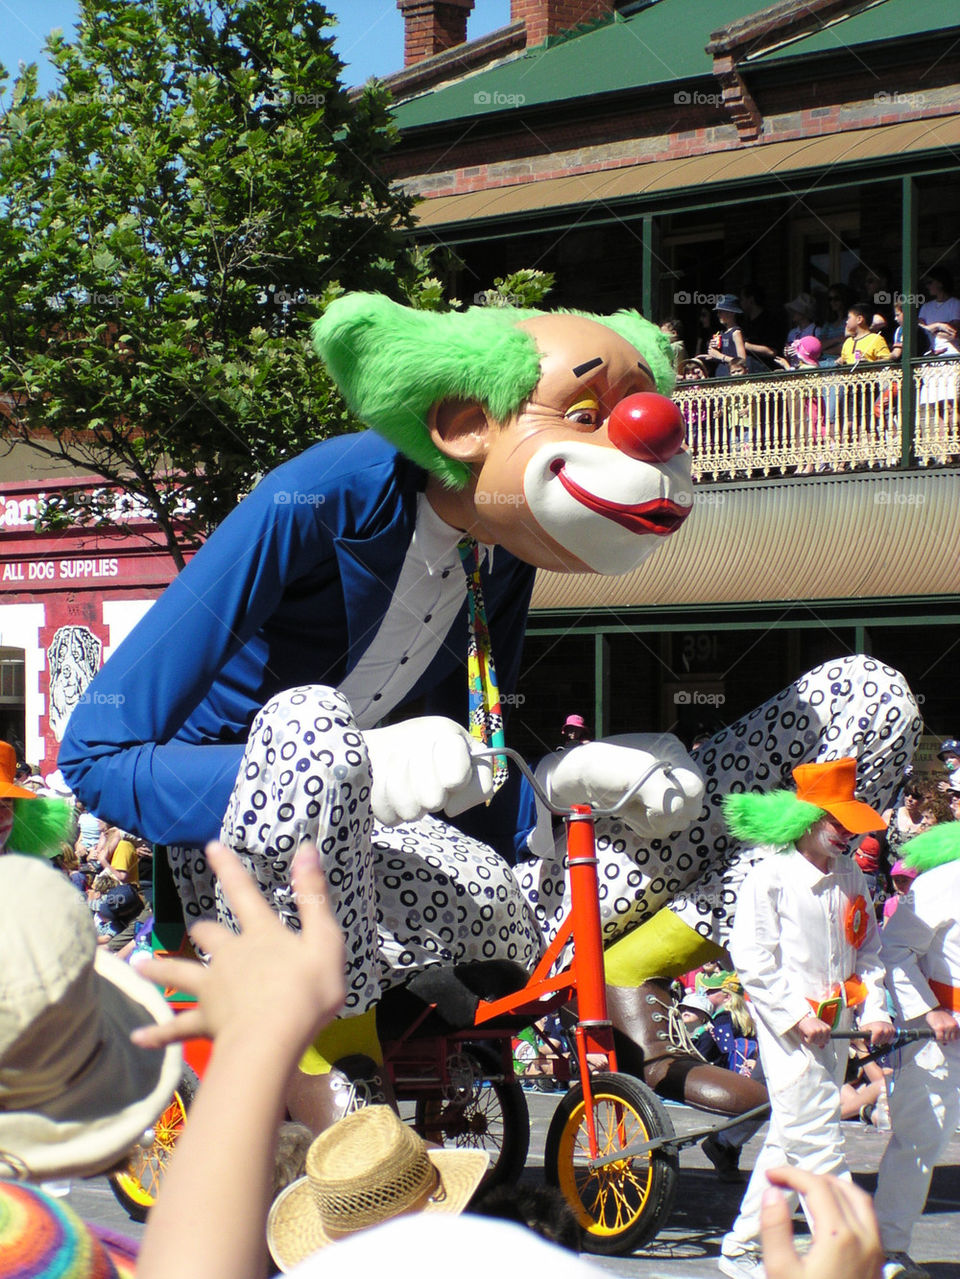 Large clown riding a trike